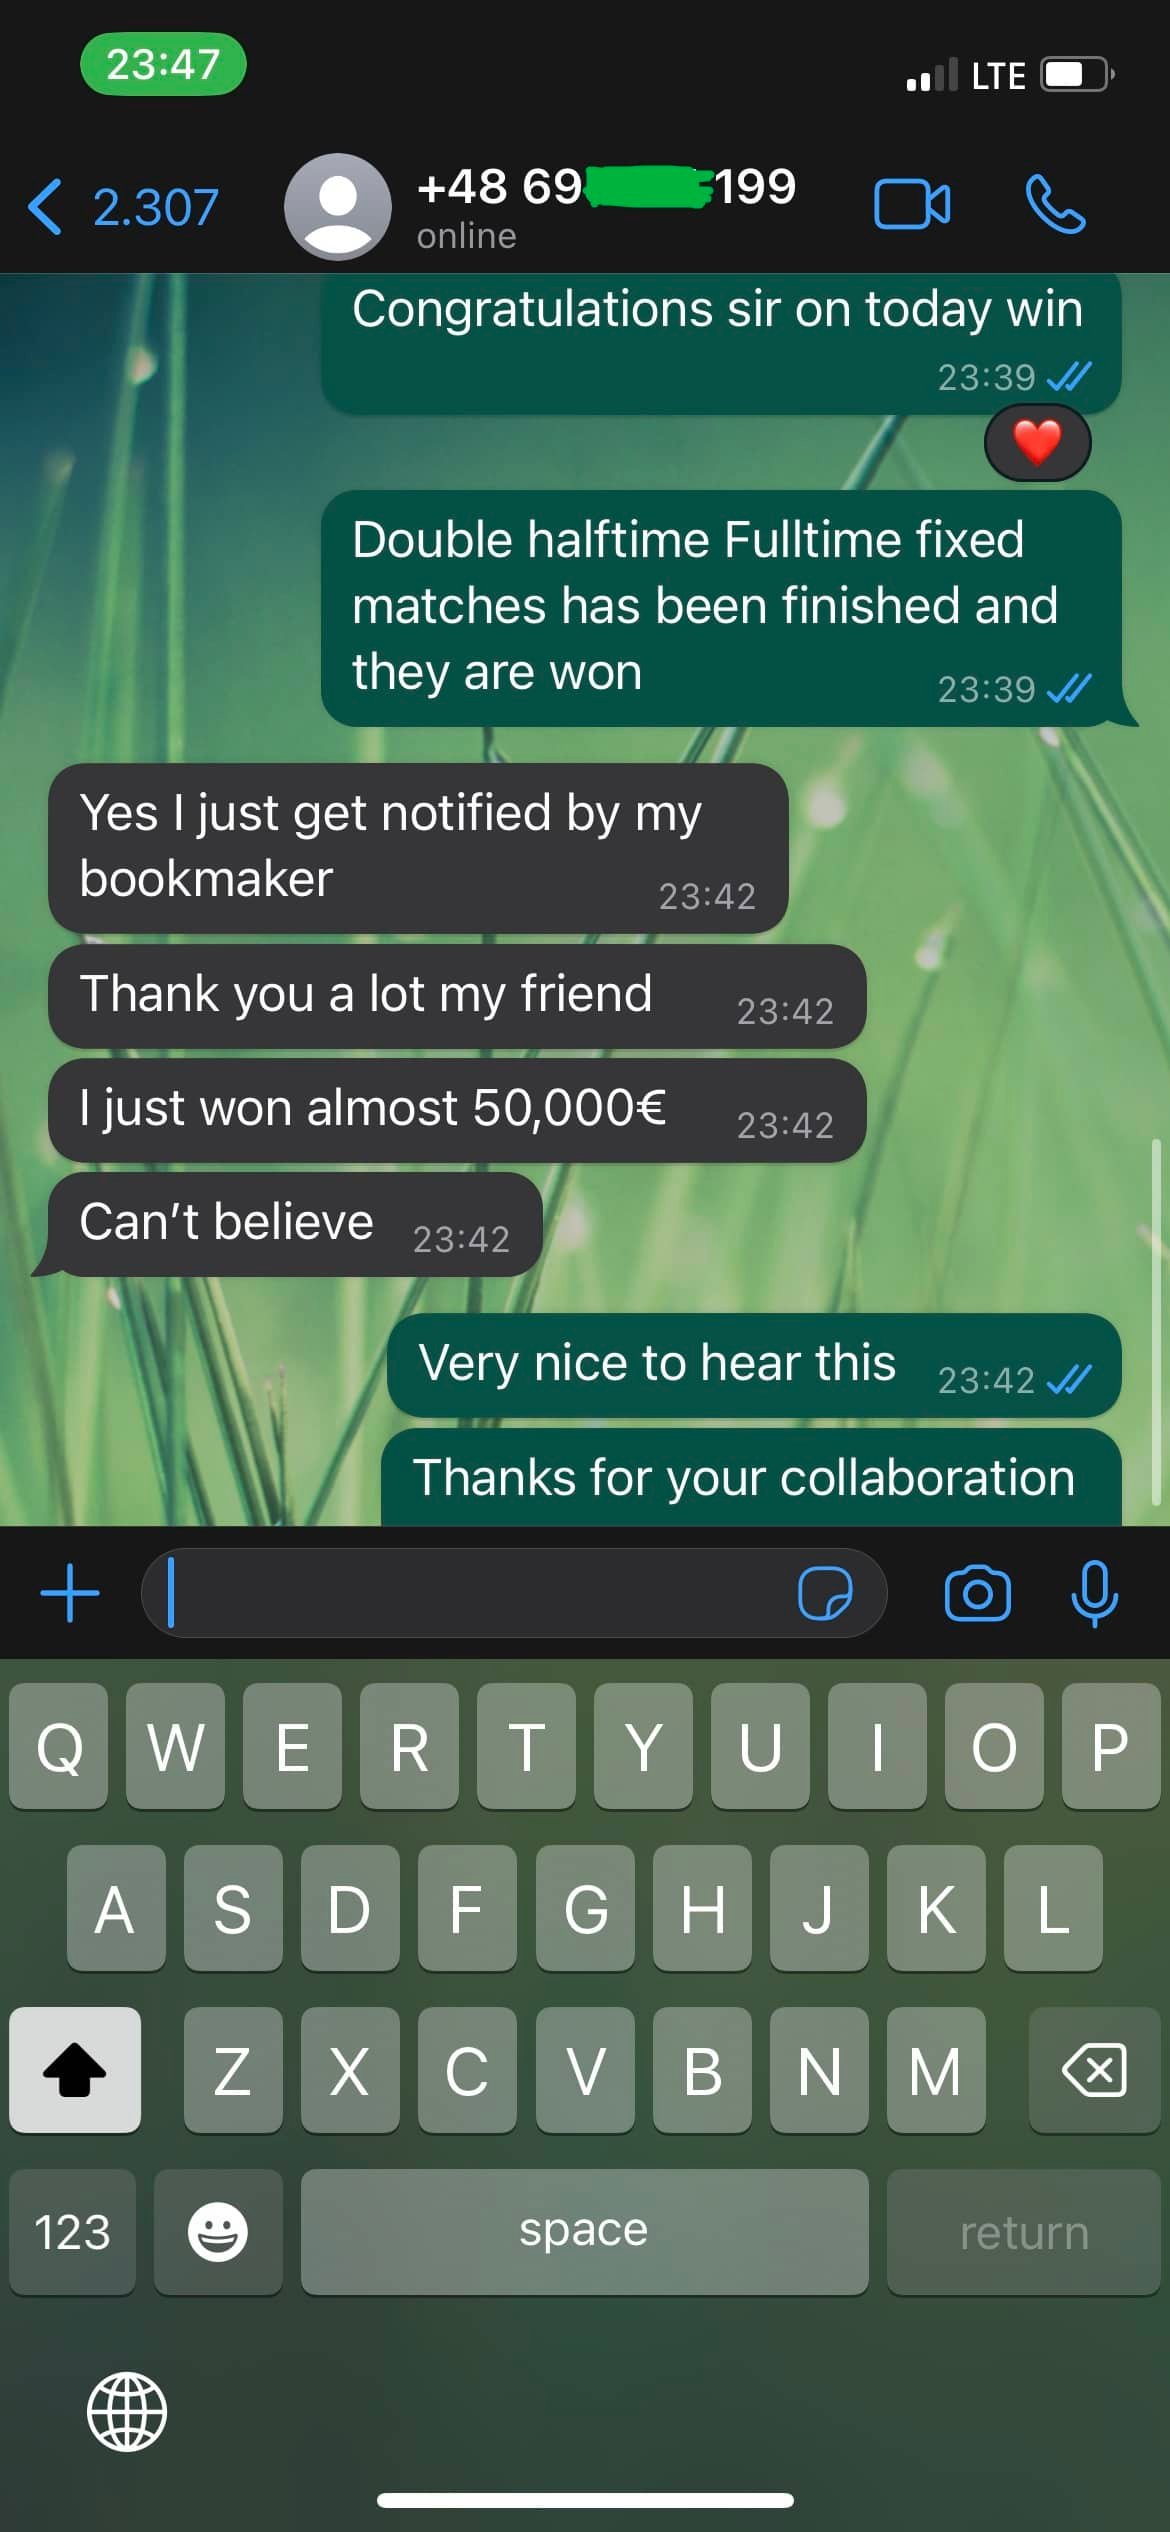 whatsapp - telegram fixed matches proof